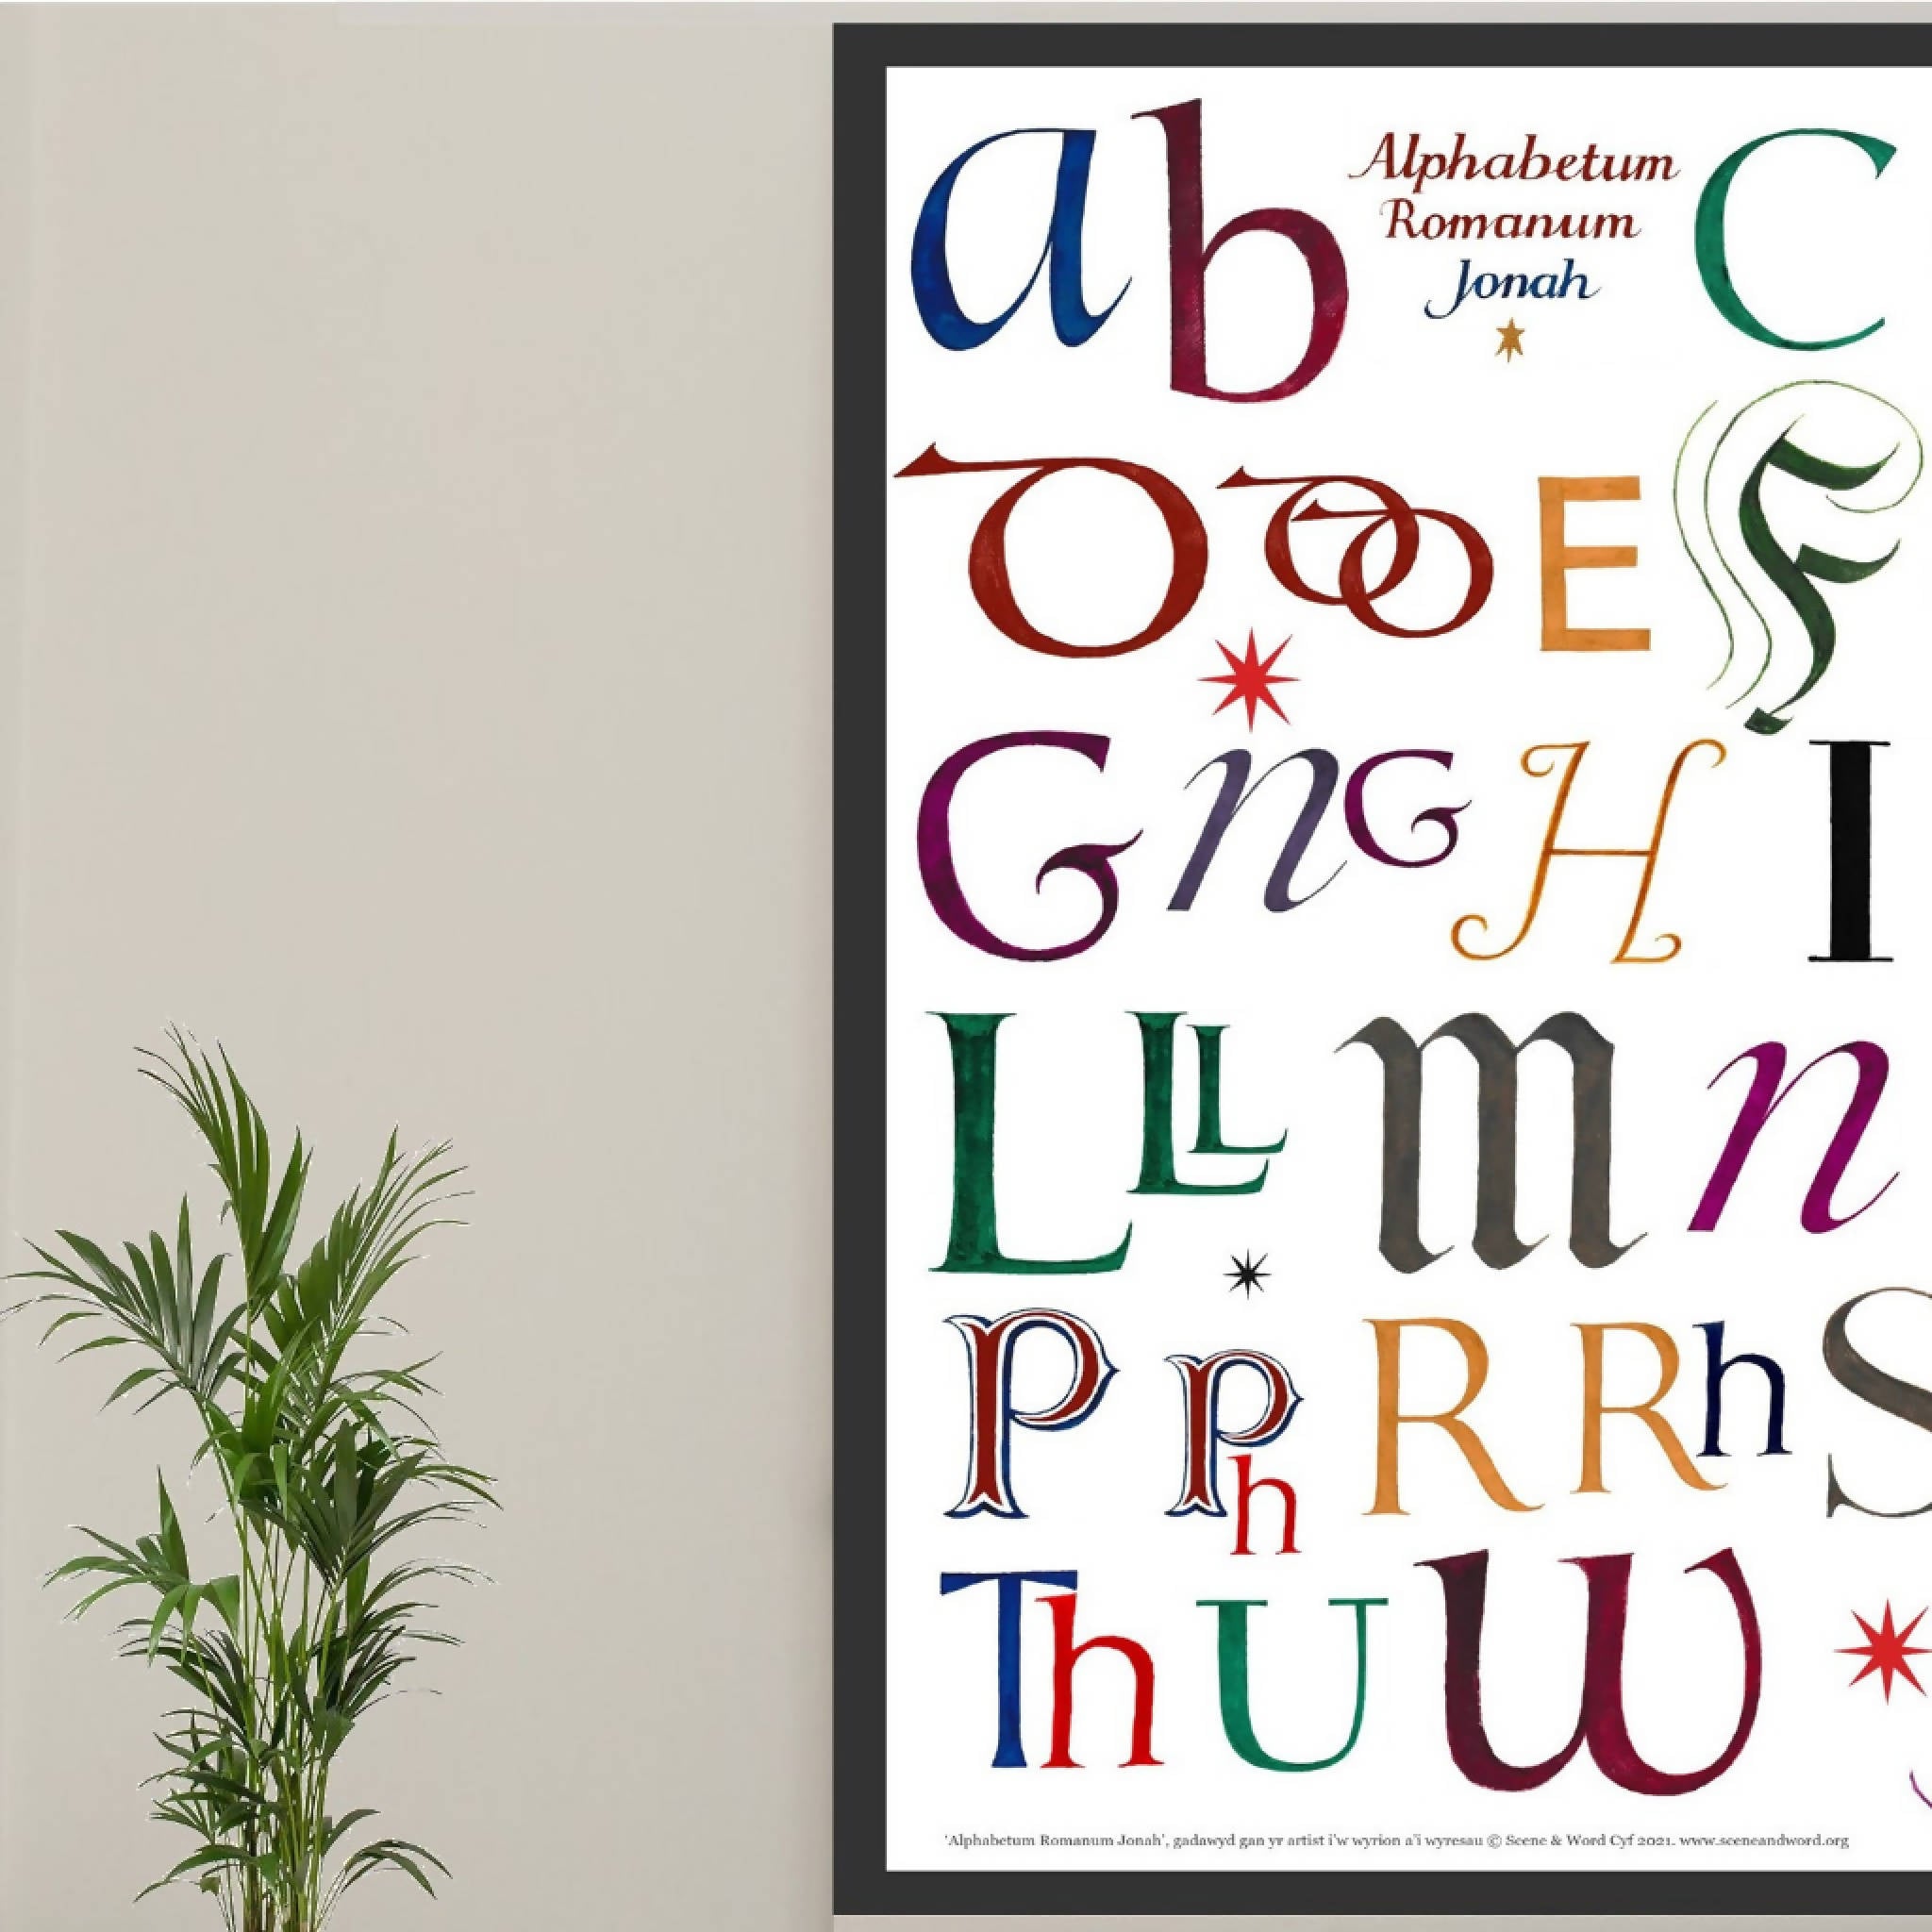 Cymraeg / Welsh alphabet poster: Alphabetum Romanum Jonah